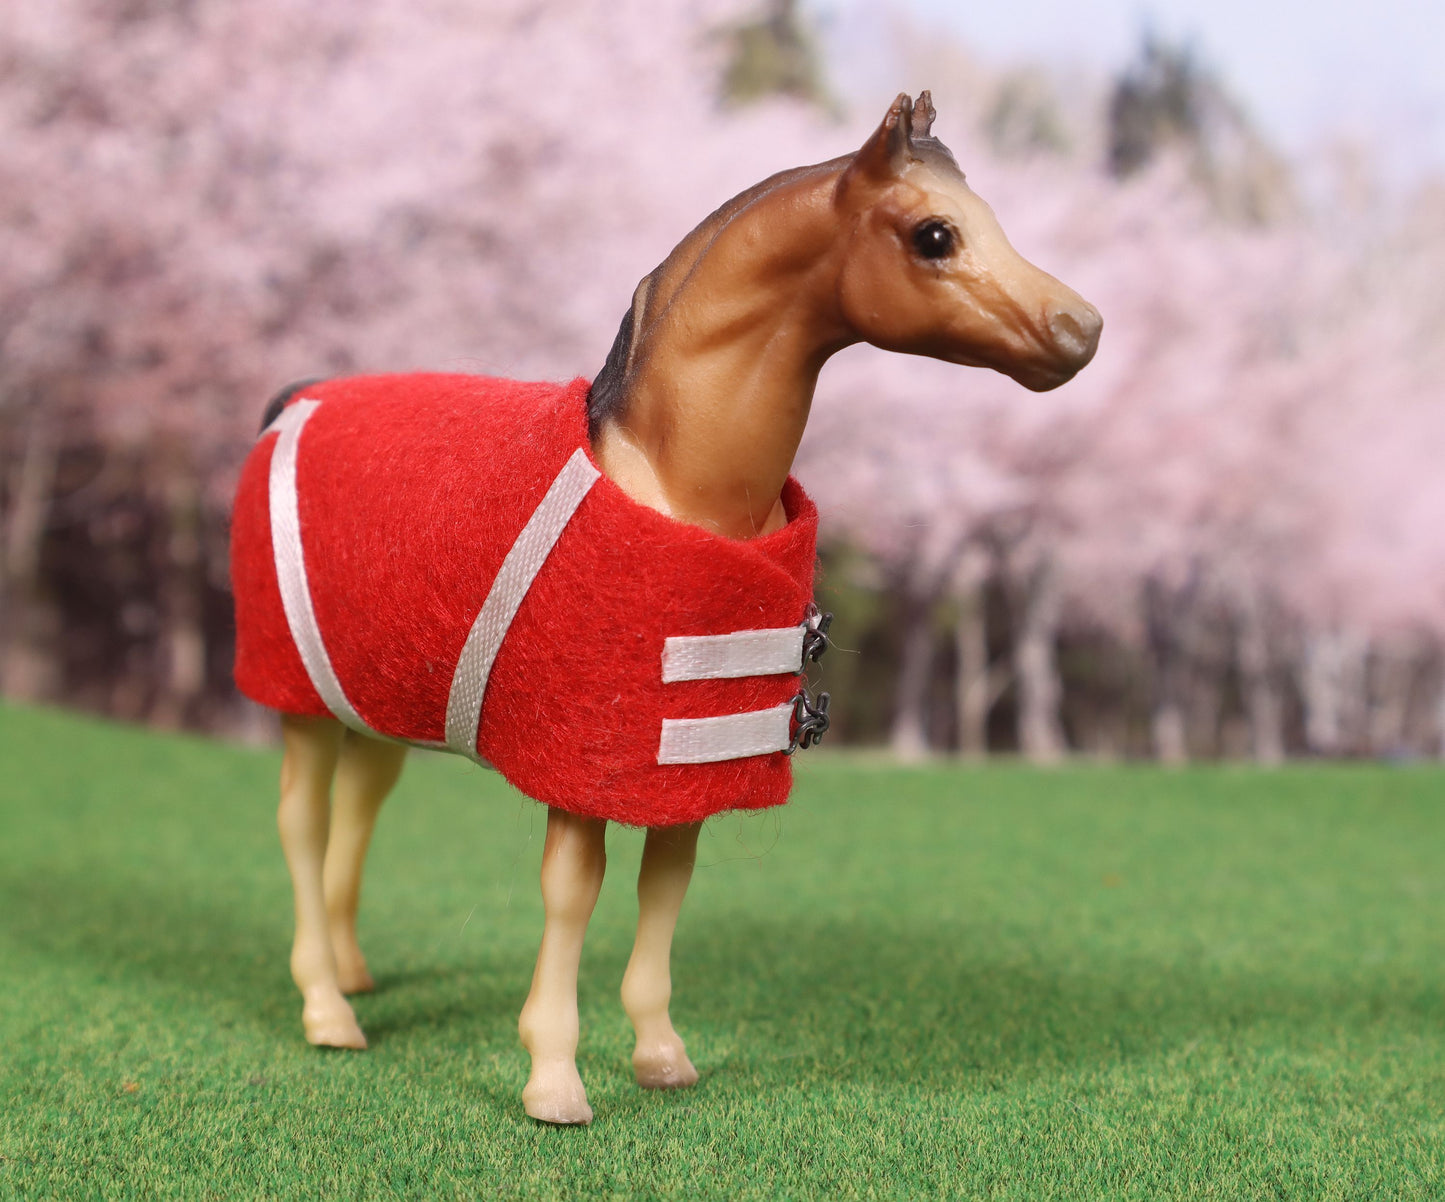 Red and White Stable Blanket for Breyer Stablemates Model Horses - Made for G1 Arabian Stallion Mold